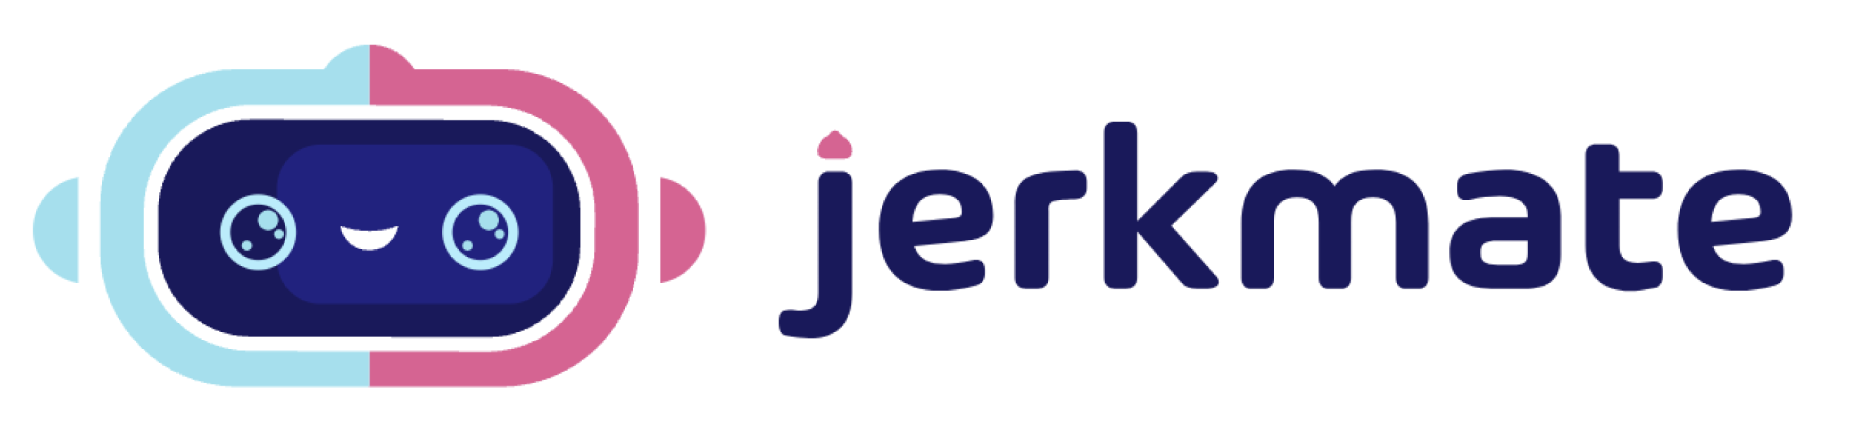 jerkmate logo 2